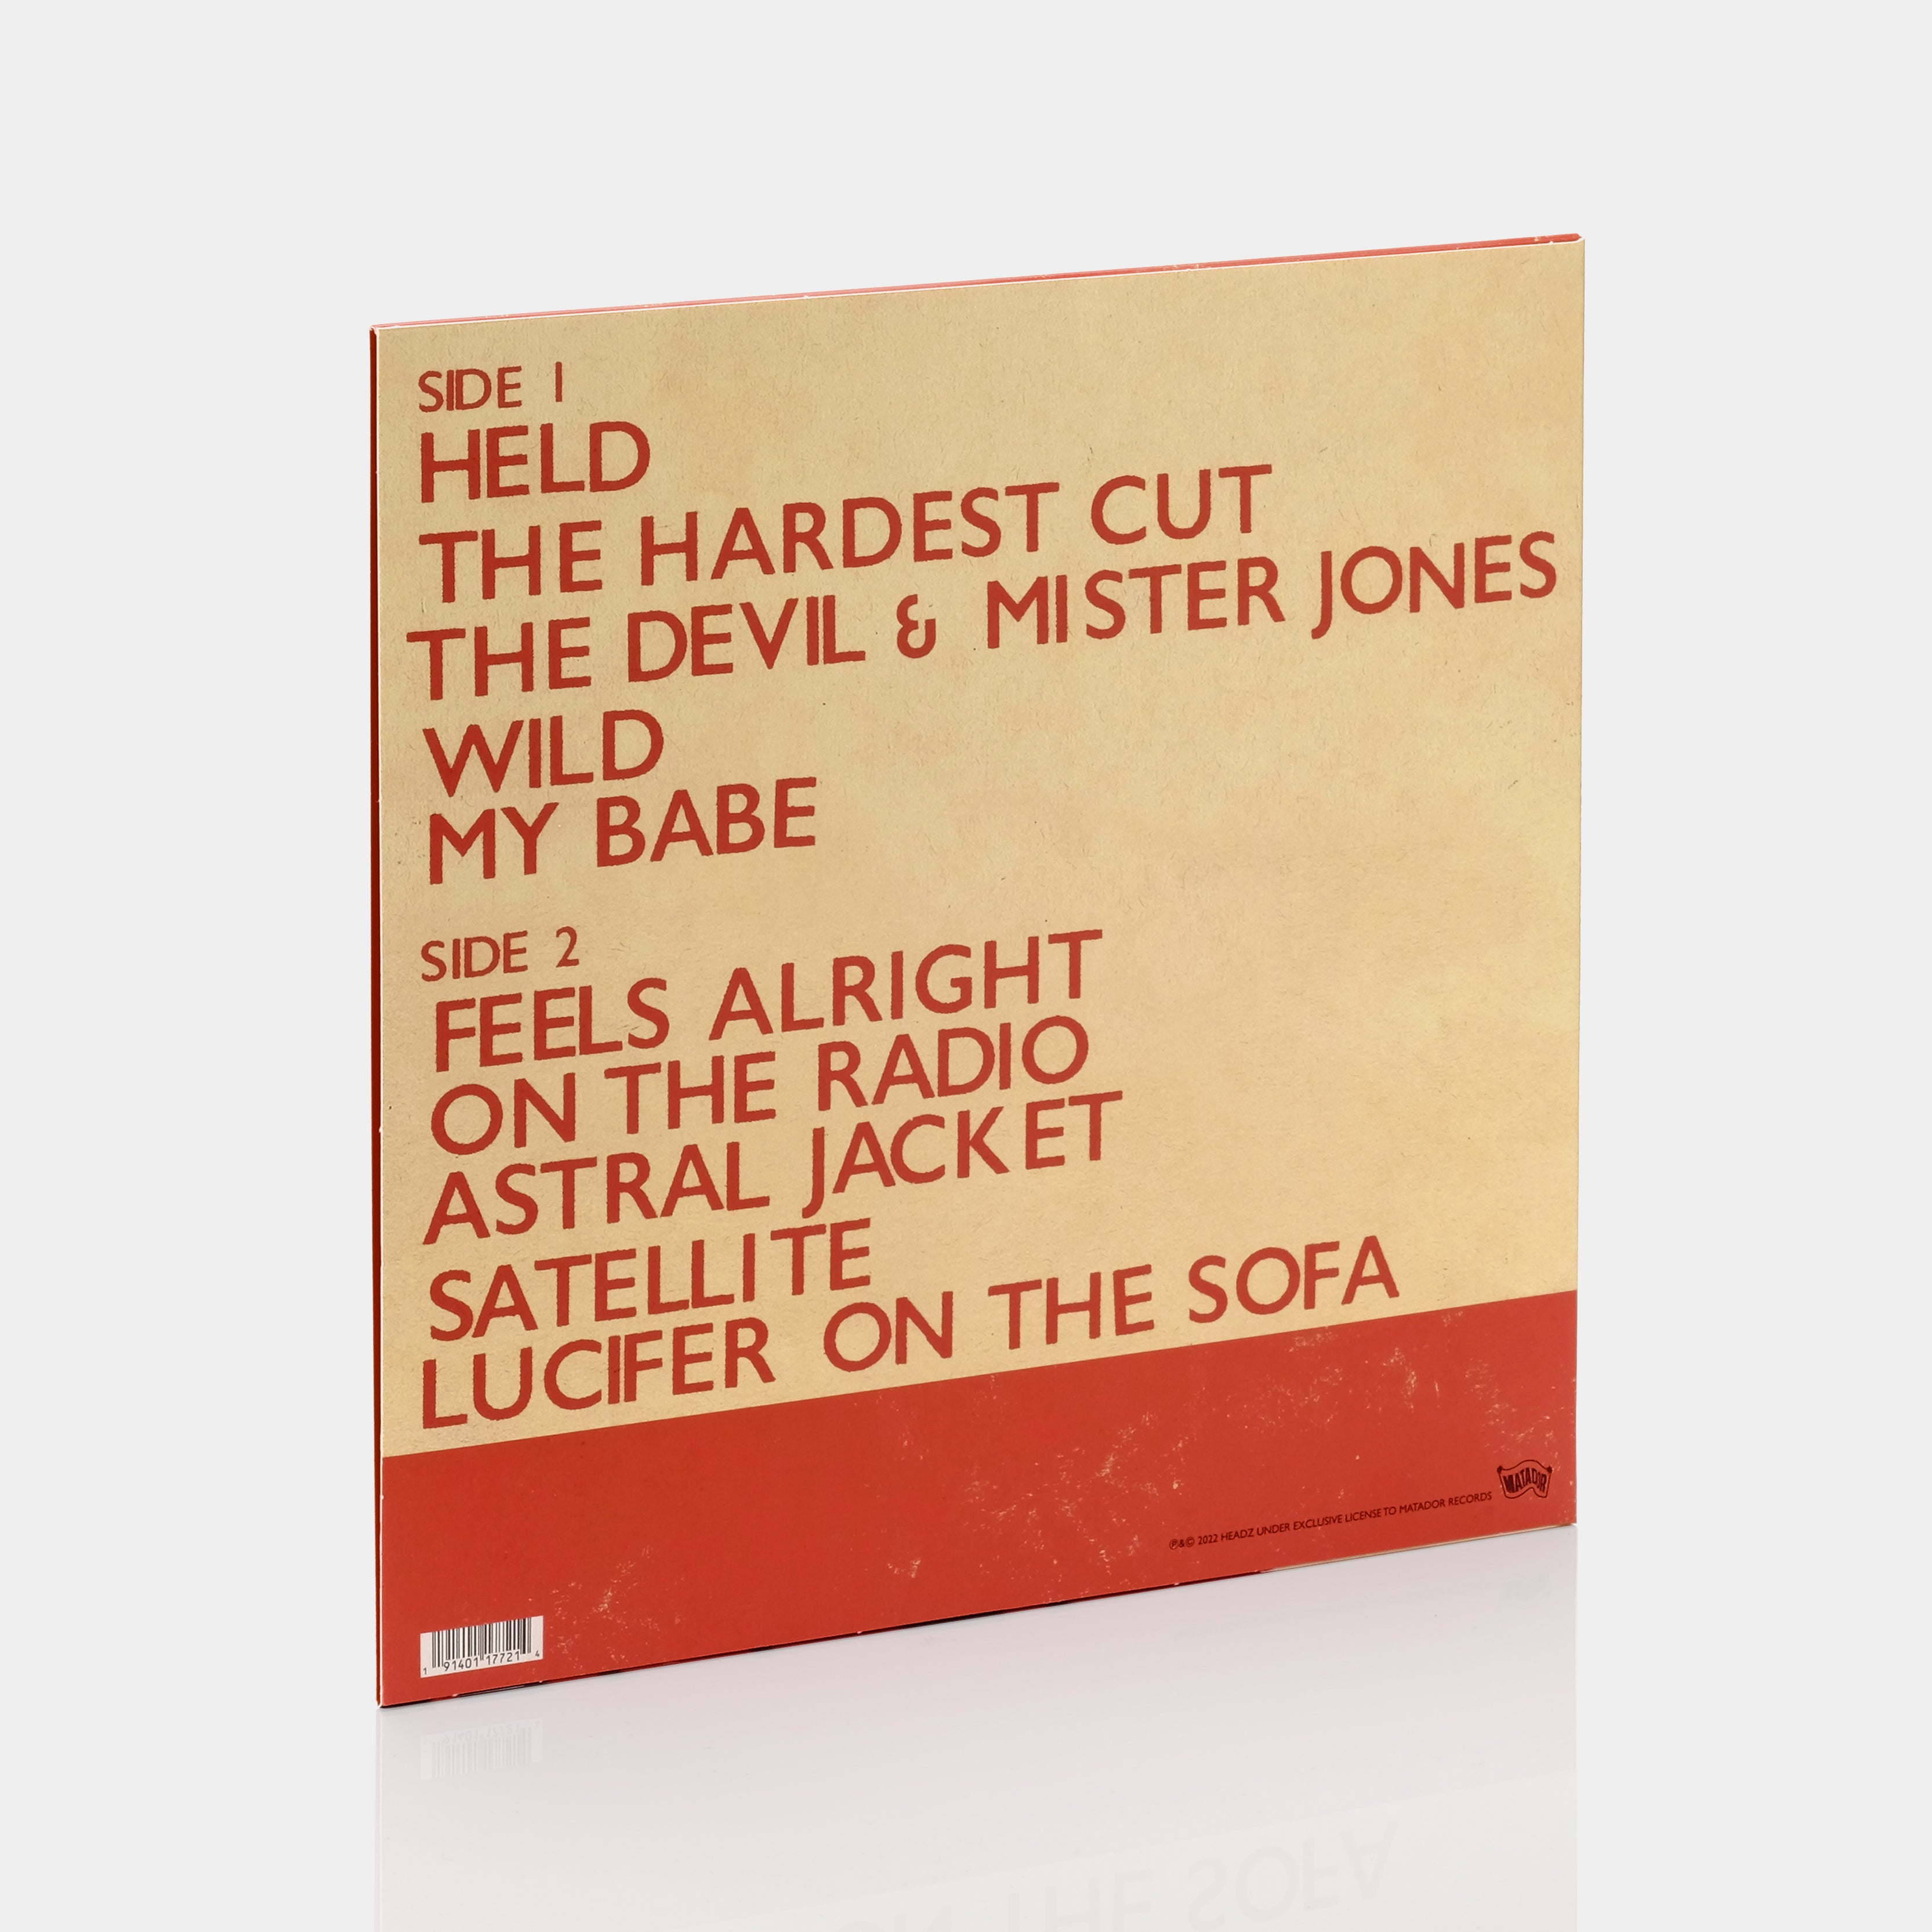 Spoon - Lucifer On The Sofa LP Orange Vinyl Record